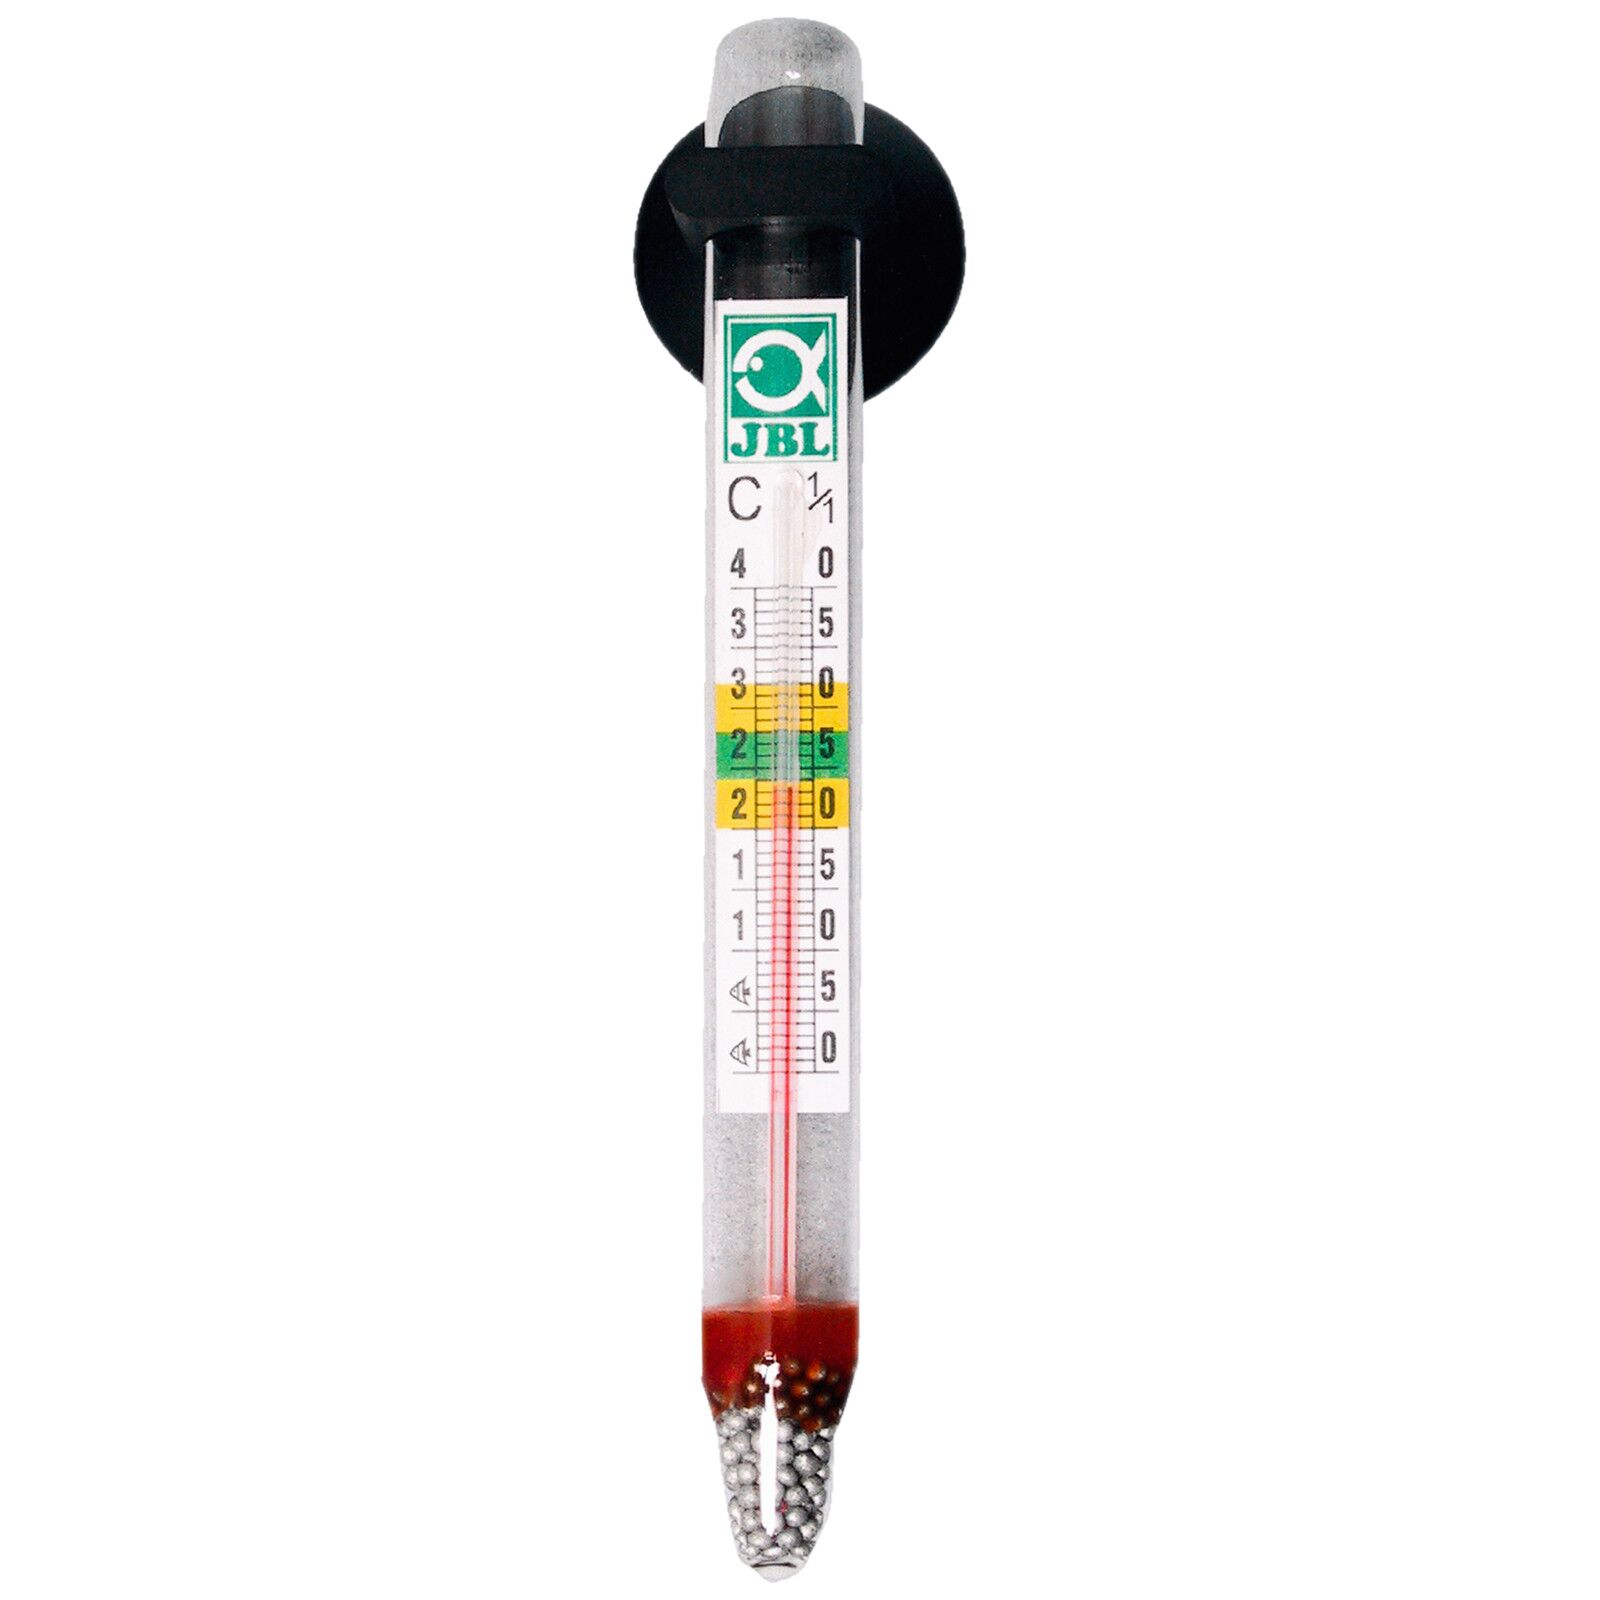 https://www.aquasabi.com/media/image/product/20417/lg/jbl-aquarium-thermometer.jpg